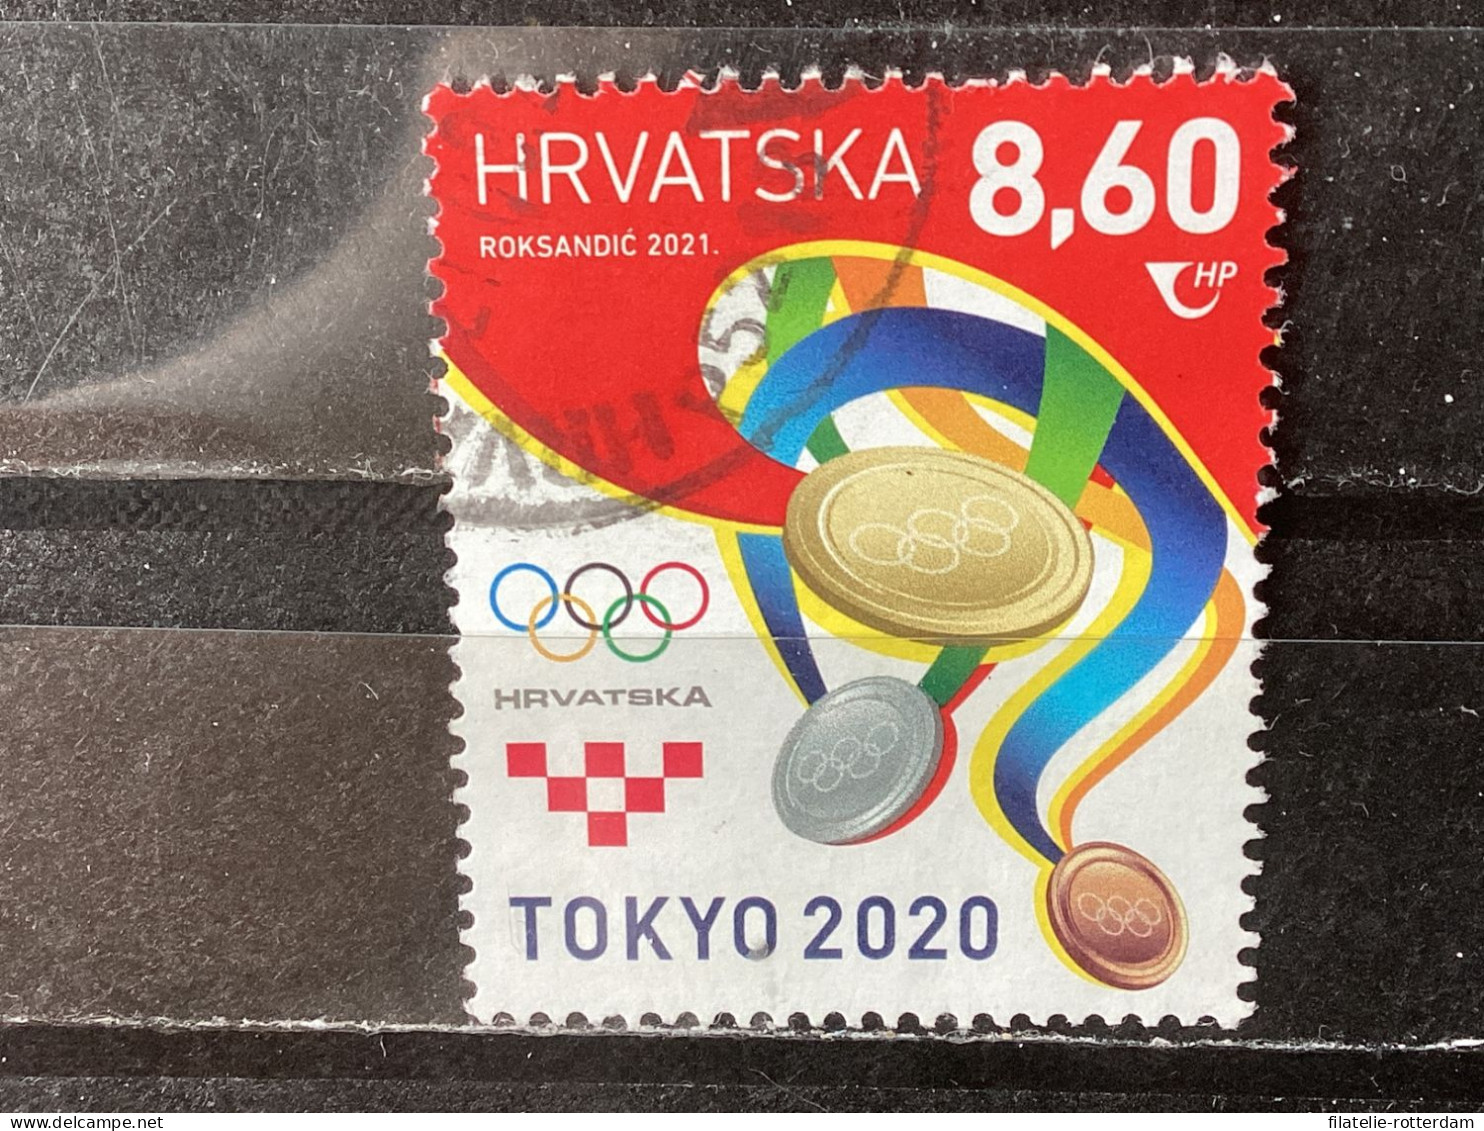 Croatia / Kroatië - Olympic Games (8.60) 2021 - Croatia